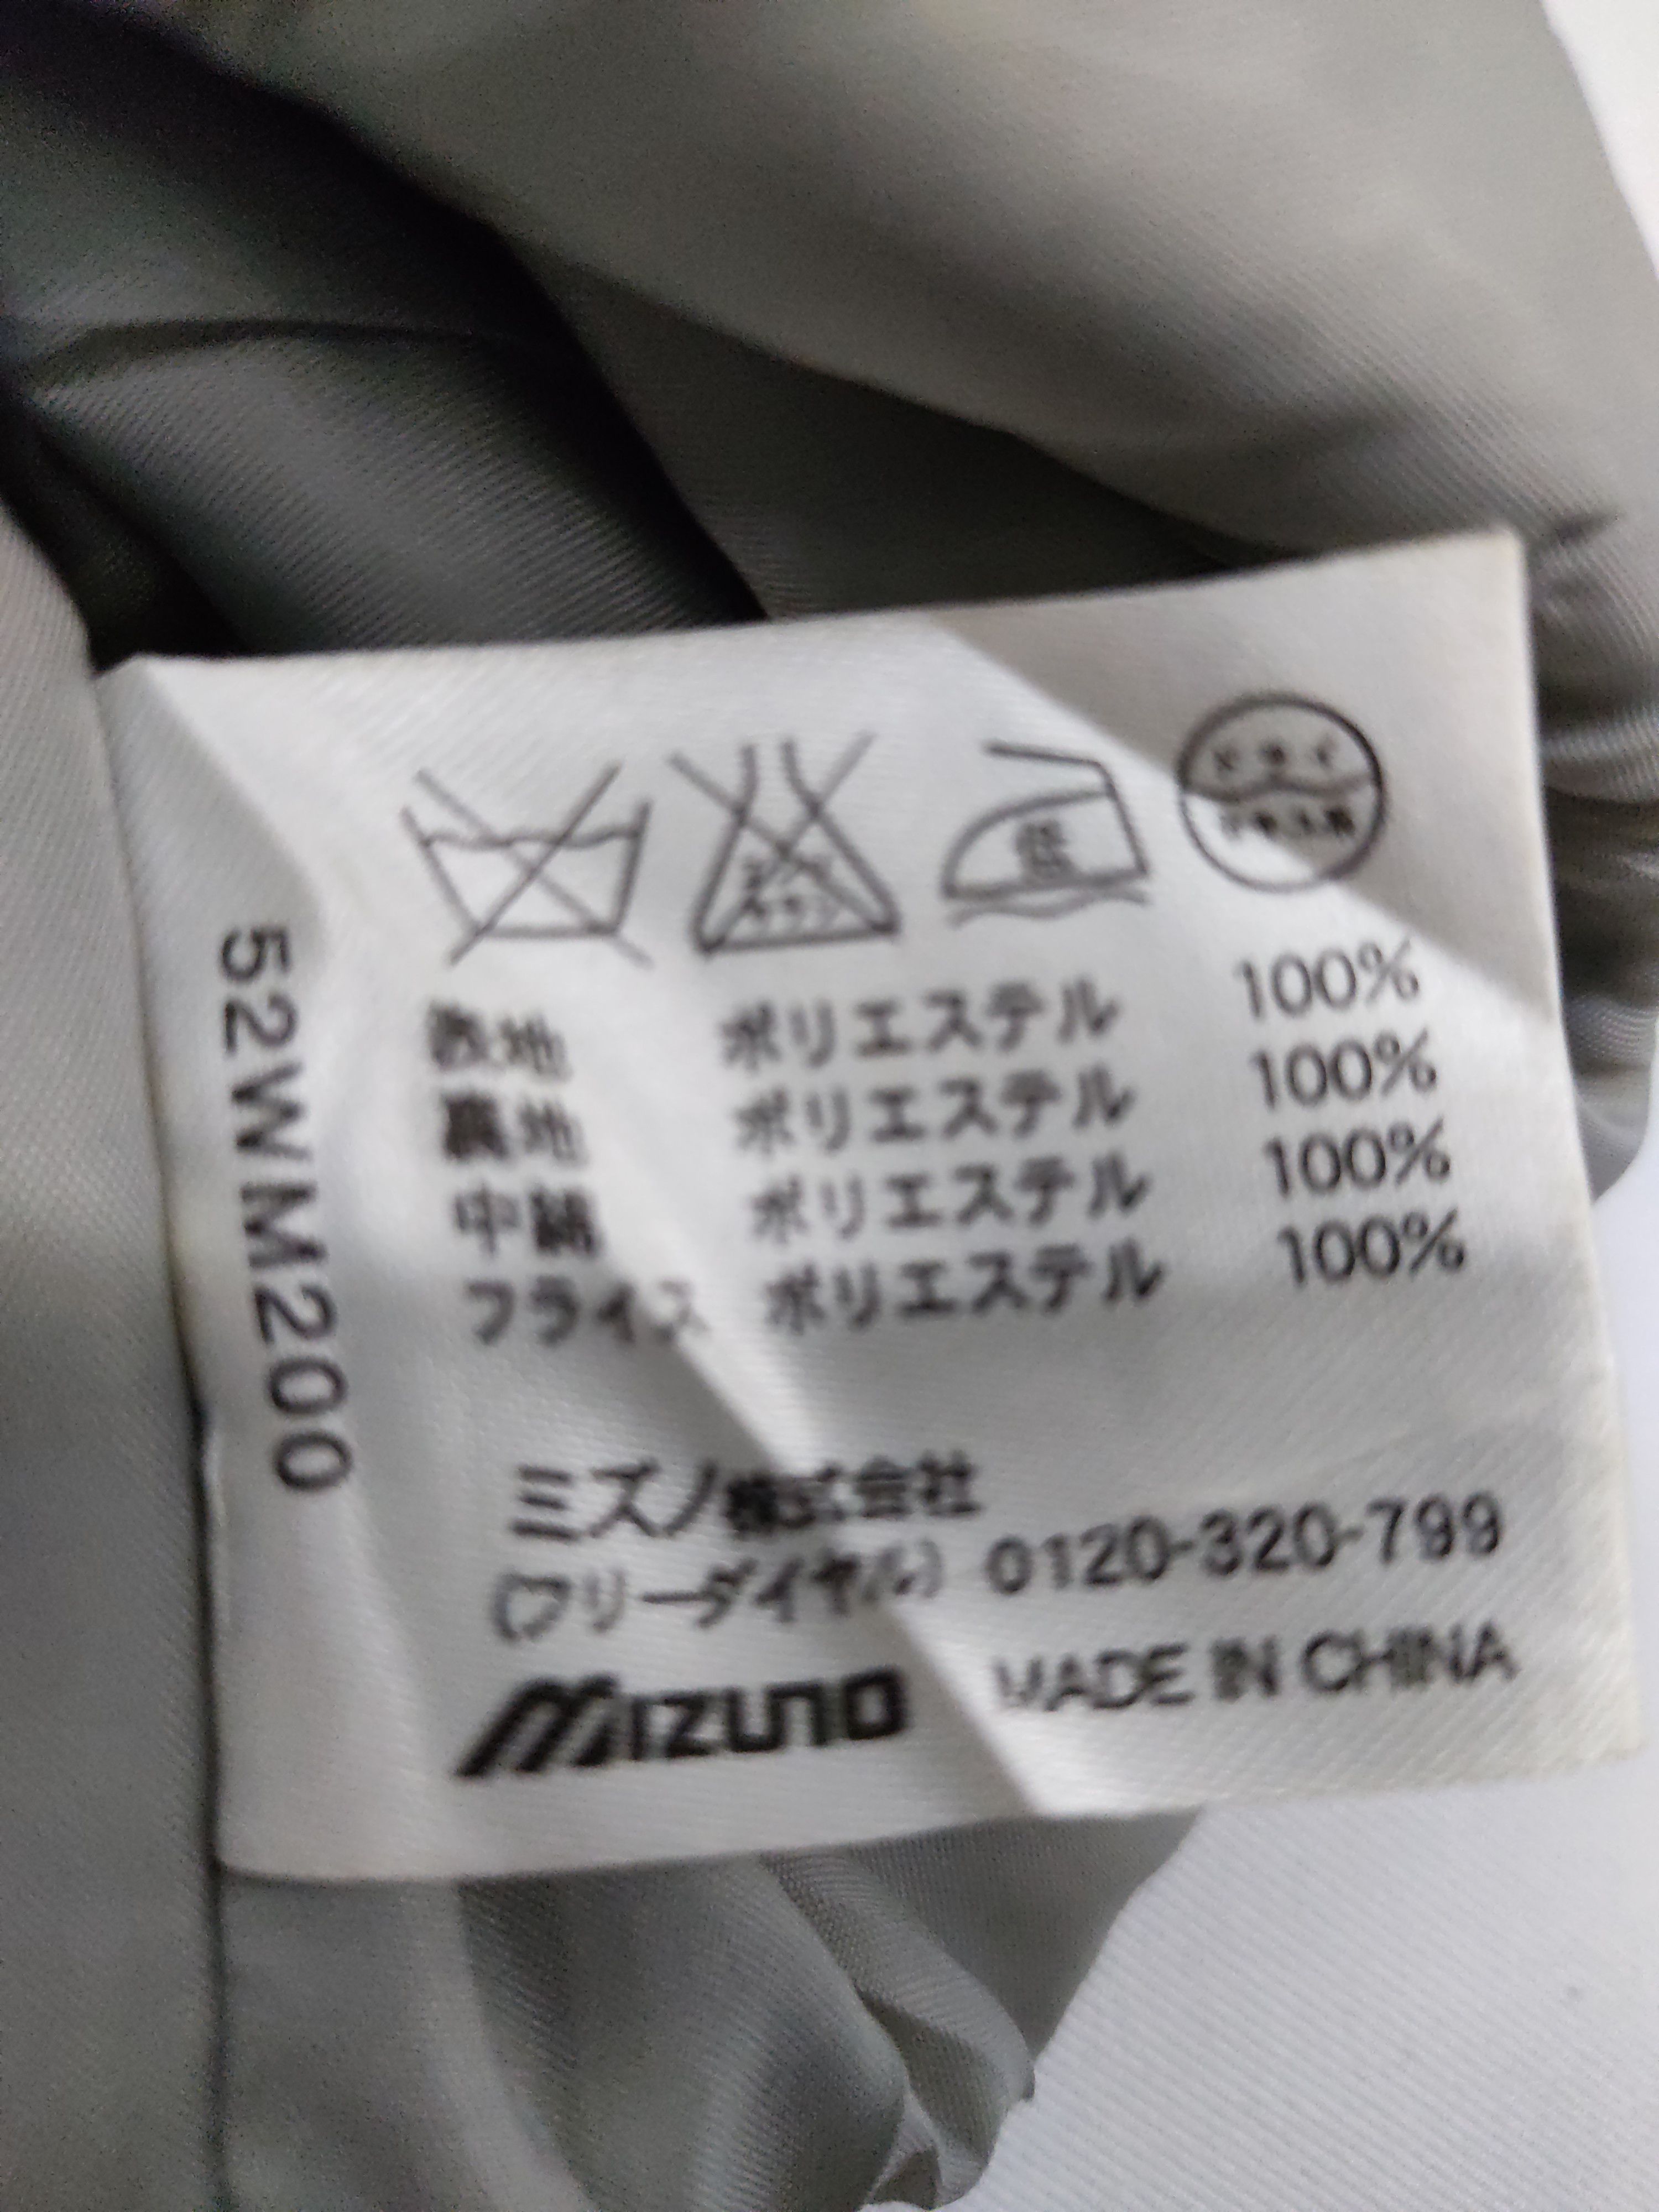 Sportswear Mizuno Jaspo Zipper Jacket Athletic Winter Wear Size US M / EU 48-50 / 2 - 10 Thumbnail